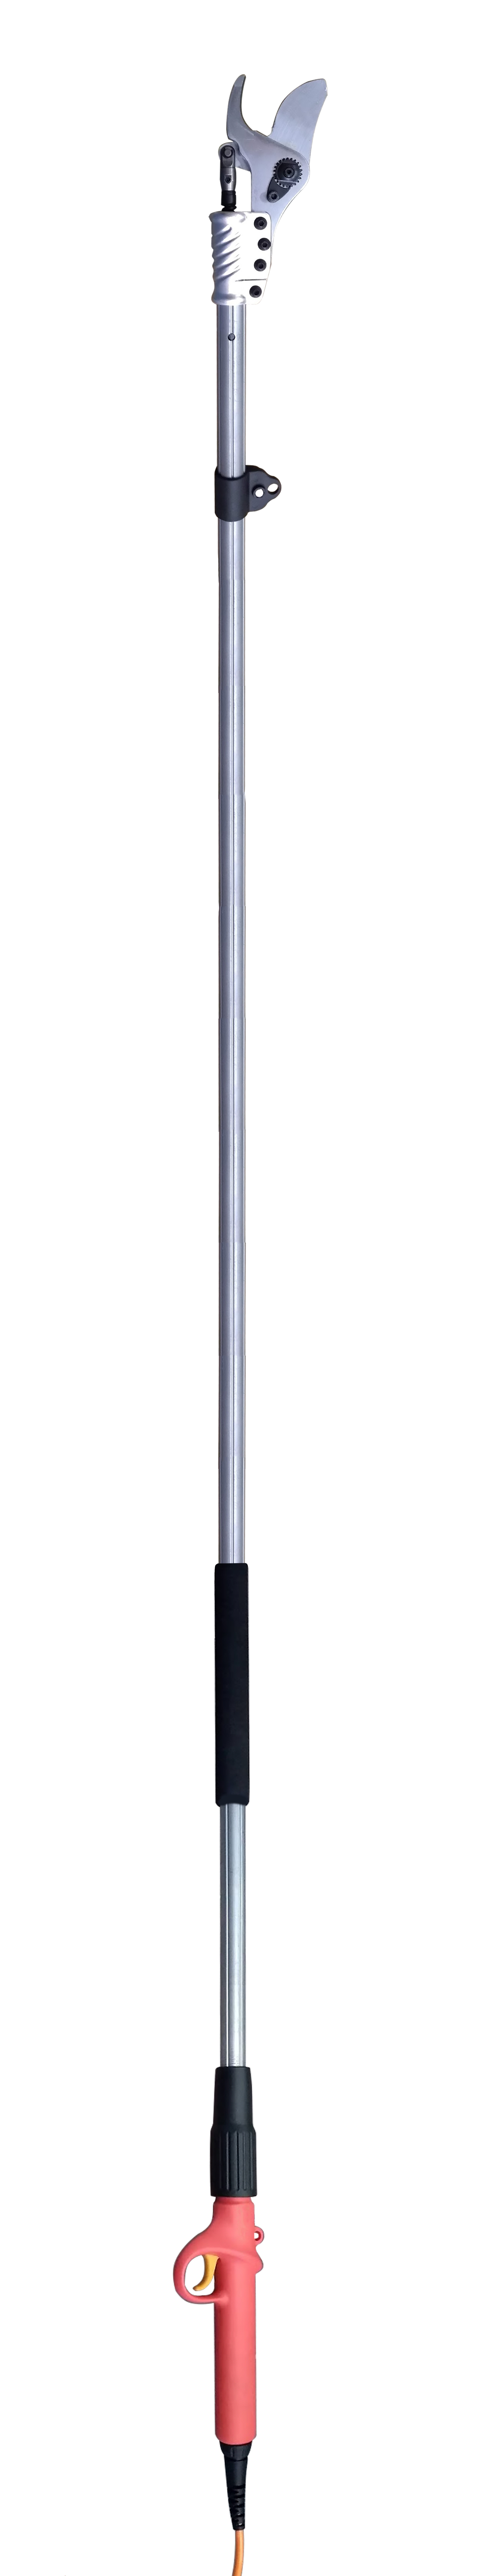 Zenport Pieza de poste de repuesto ePruner de largo alcance LEP848-POLE-1 Poste de aluminio, conjunto de varilla de cuchilla